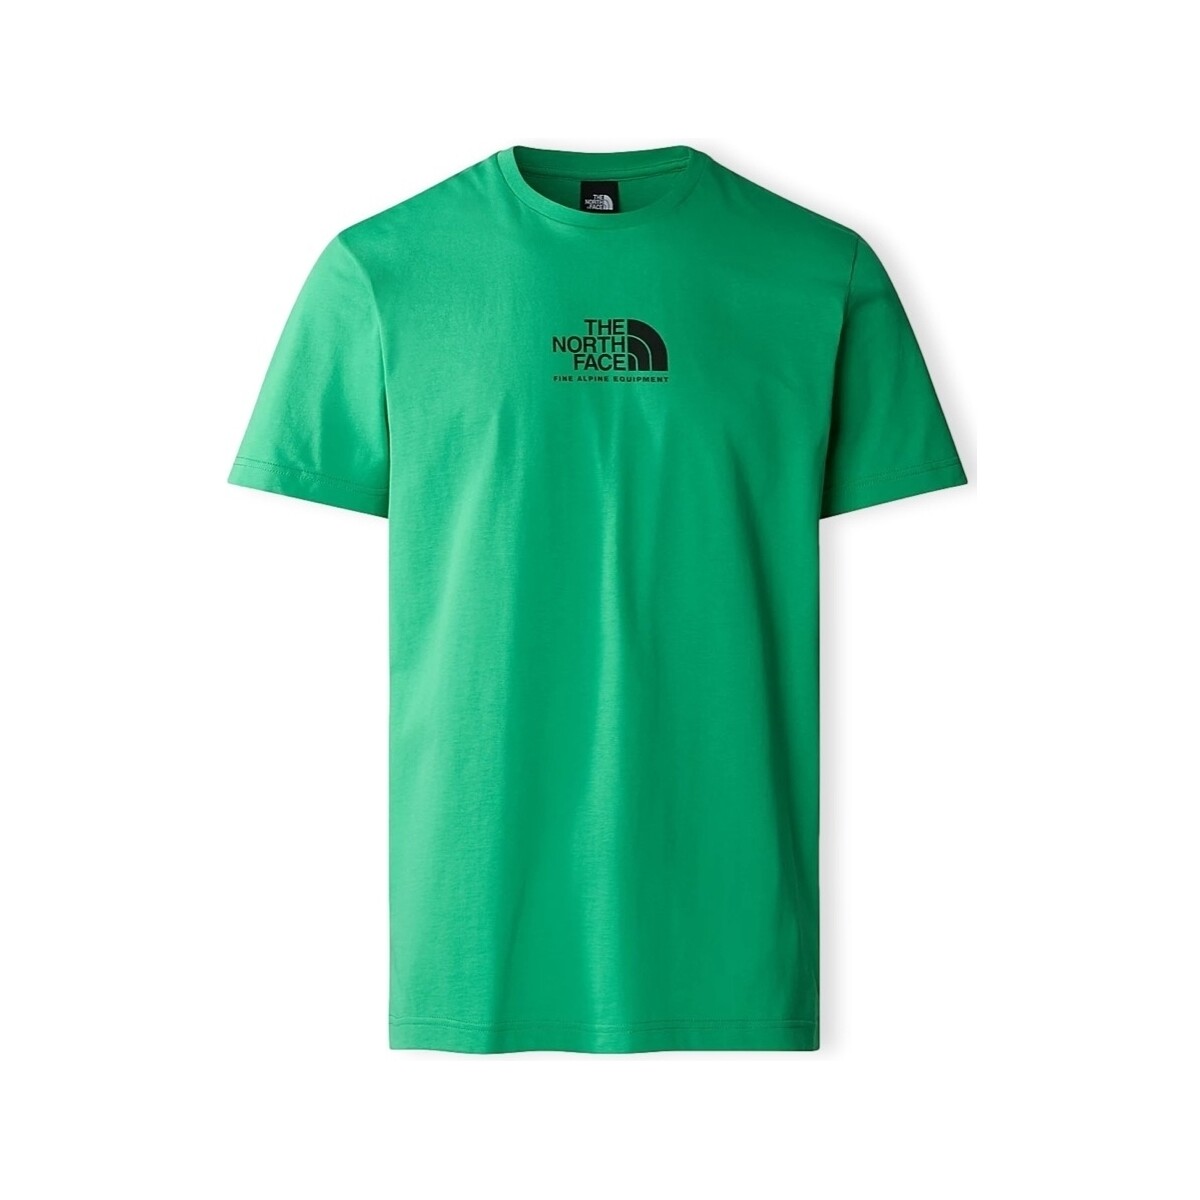 Ruhák Férfi Pólók / Galléros Pólók The North Face T-Shirt Fine Alpine Equipment - Optic Emerald Zöld